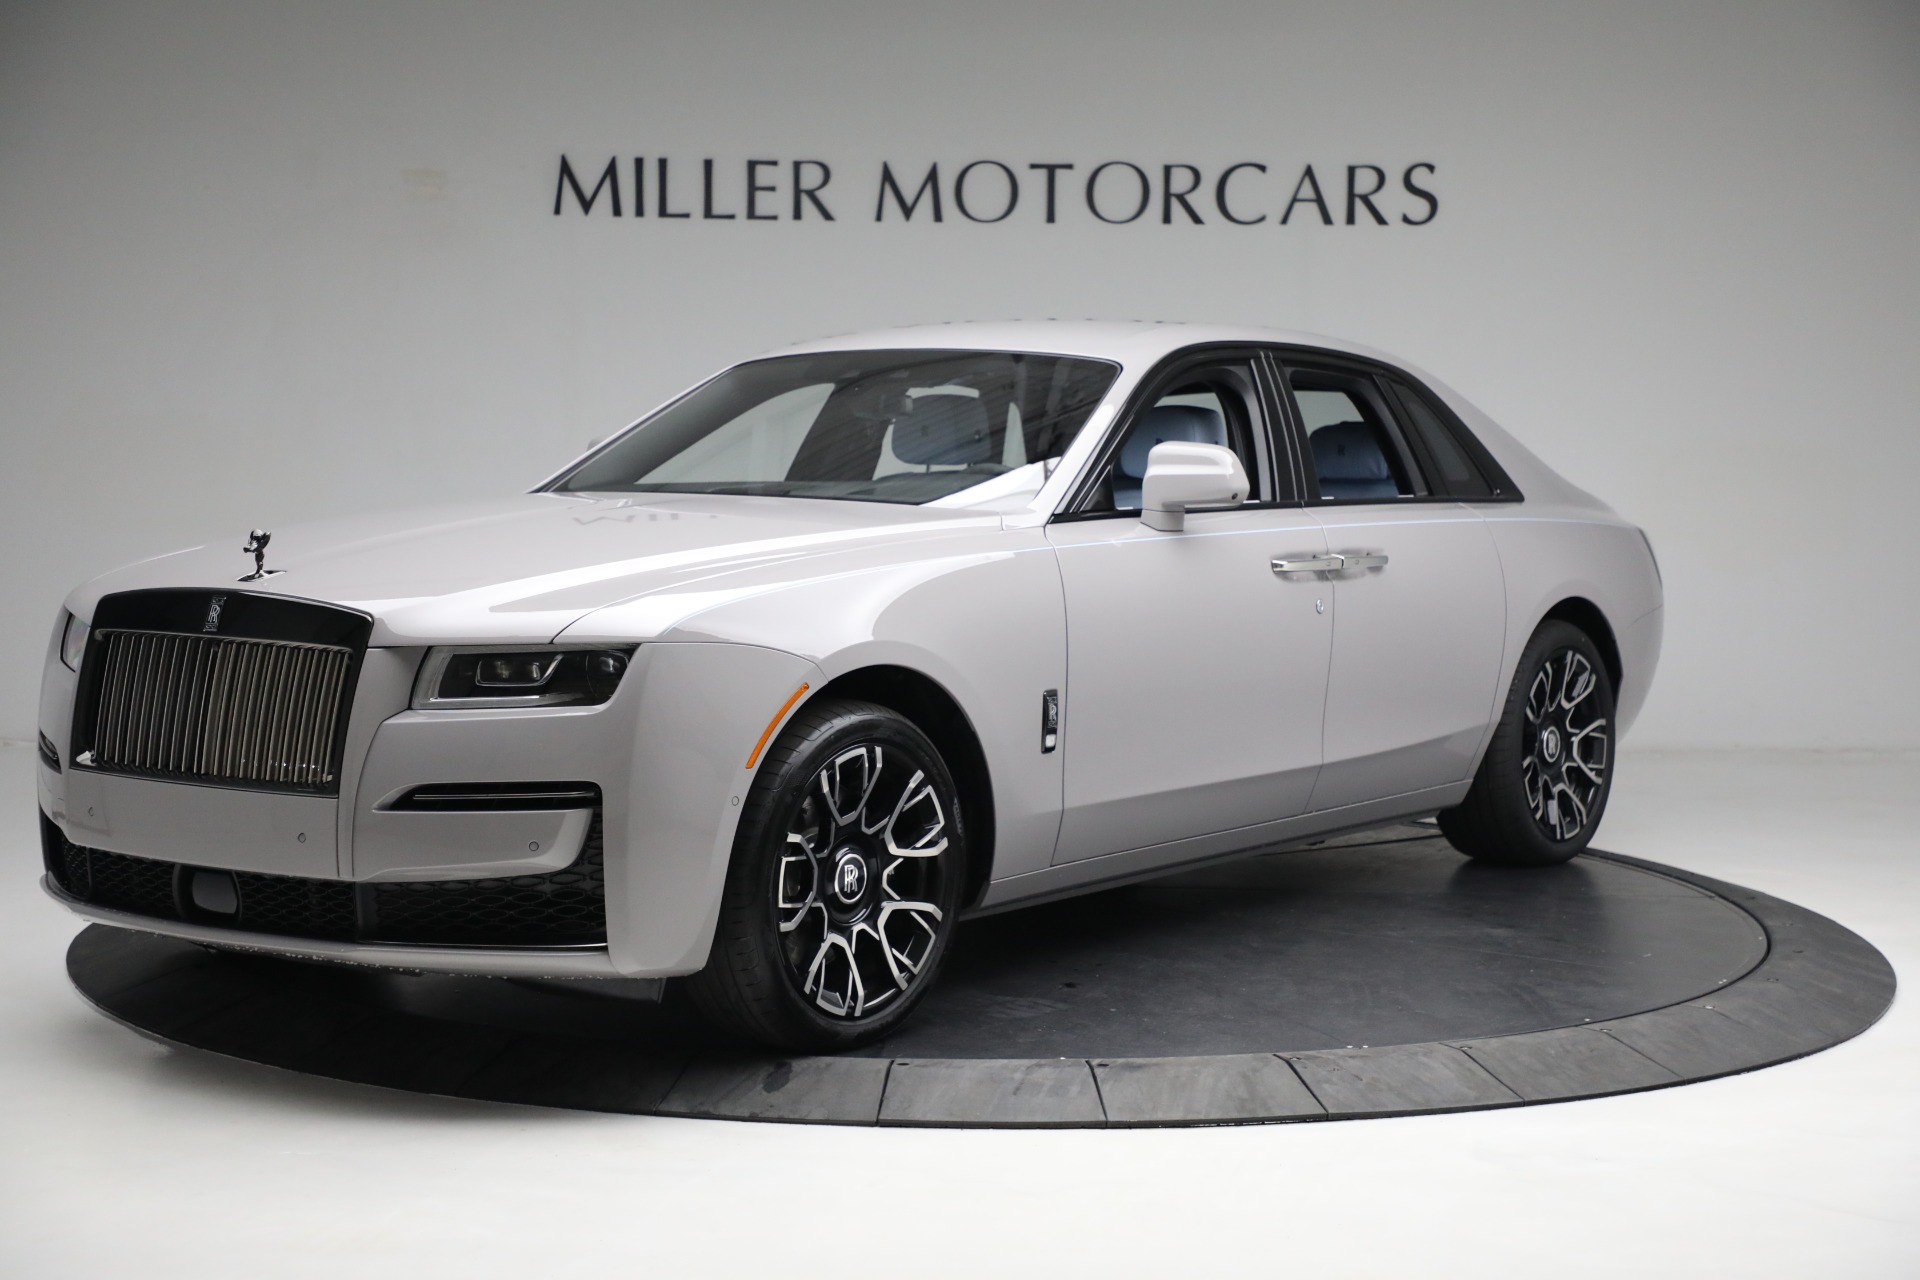 Rolls-Royce Luxury Interior Features - Miller Motorcars